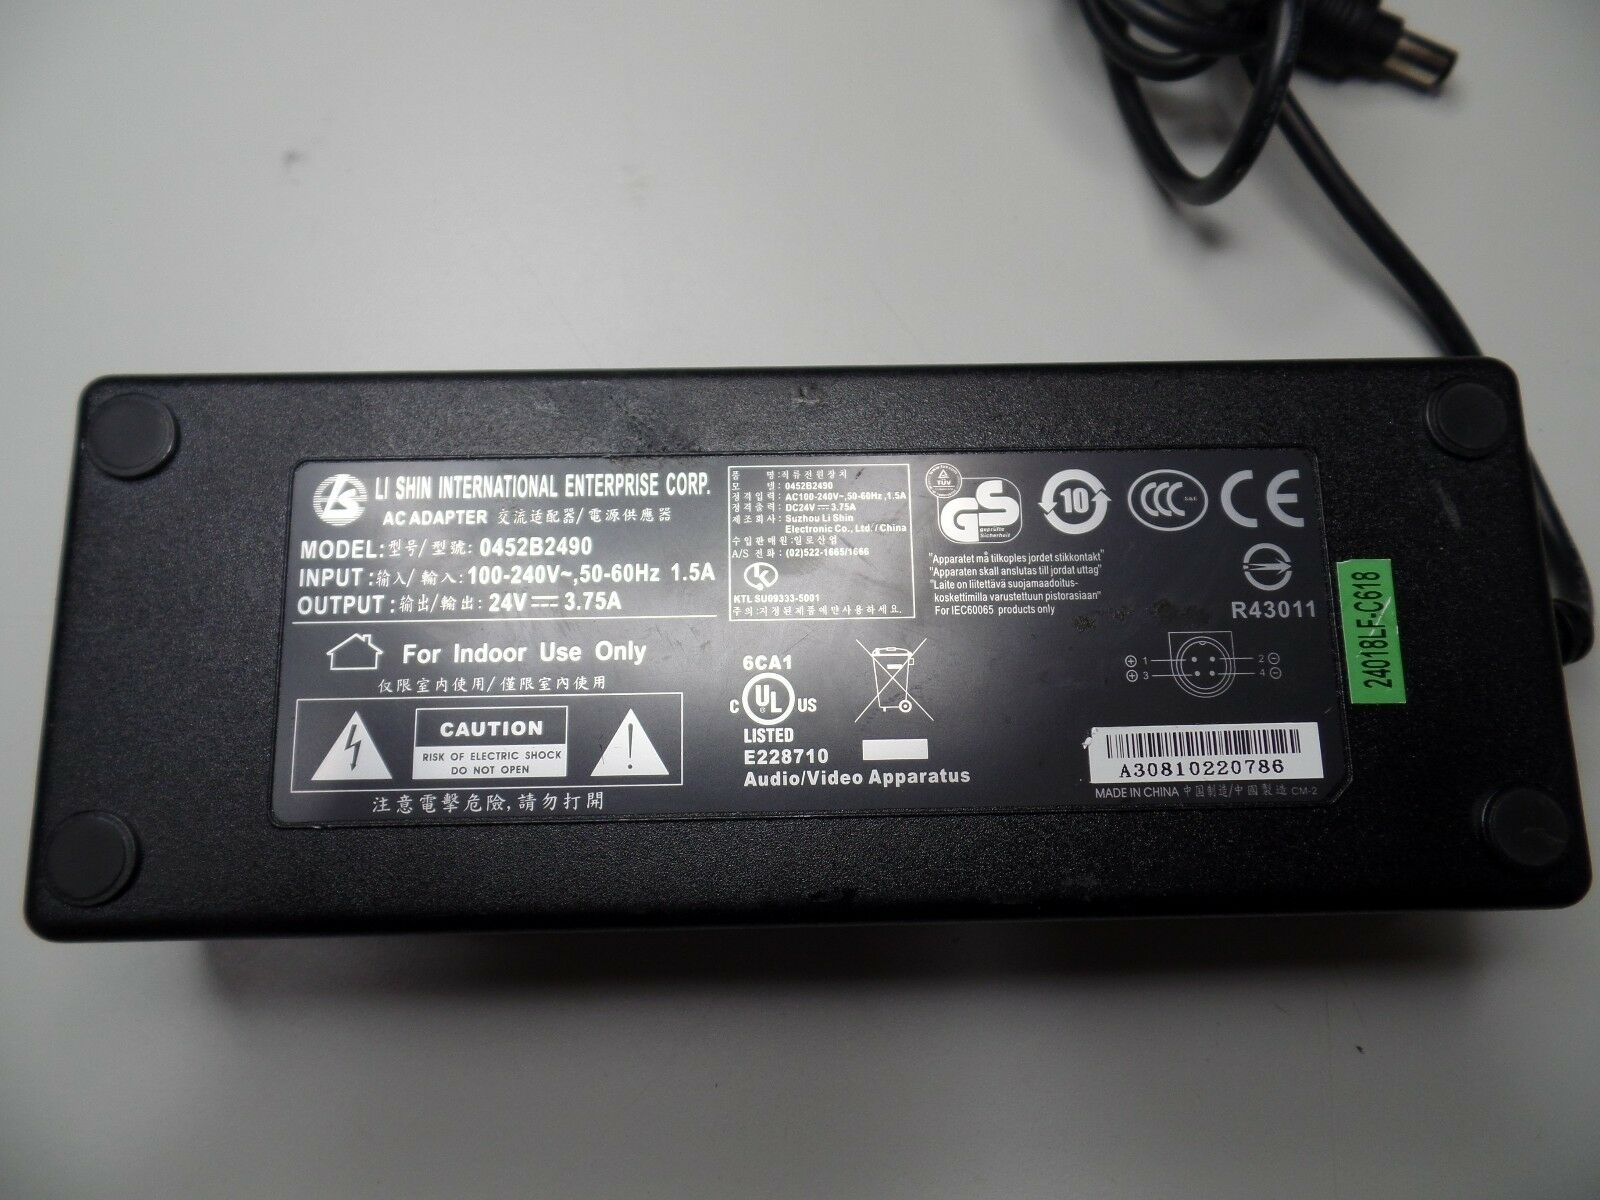 Genuine Li Shin International Enterprise Corp 0452B2490 24V 3.75A Adapter Condition: new Specific